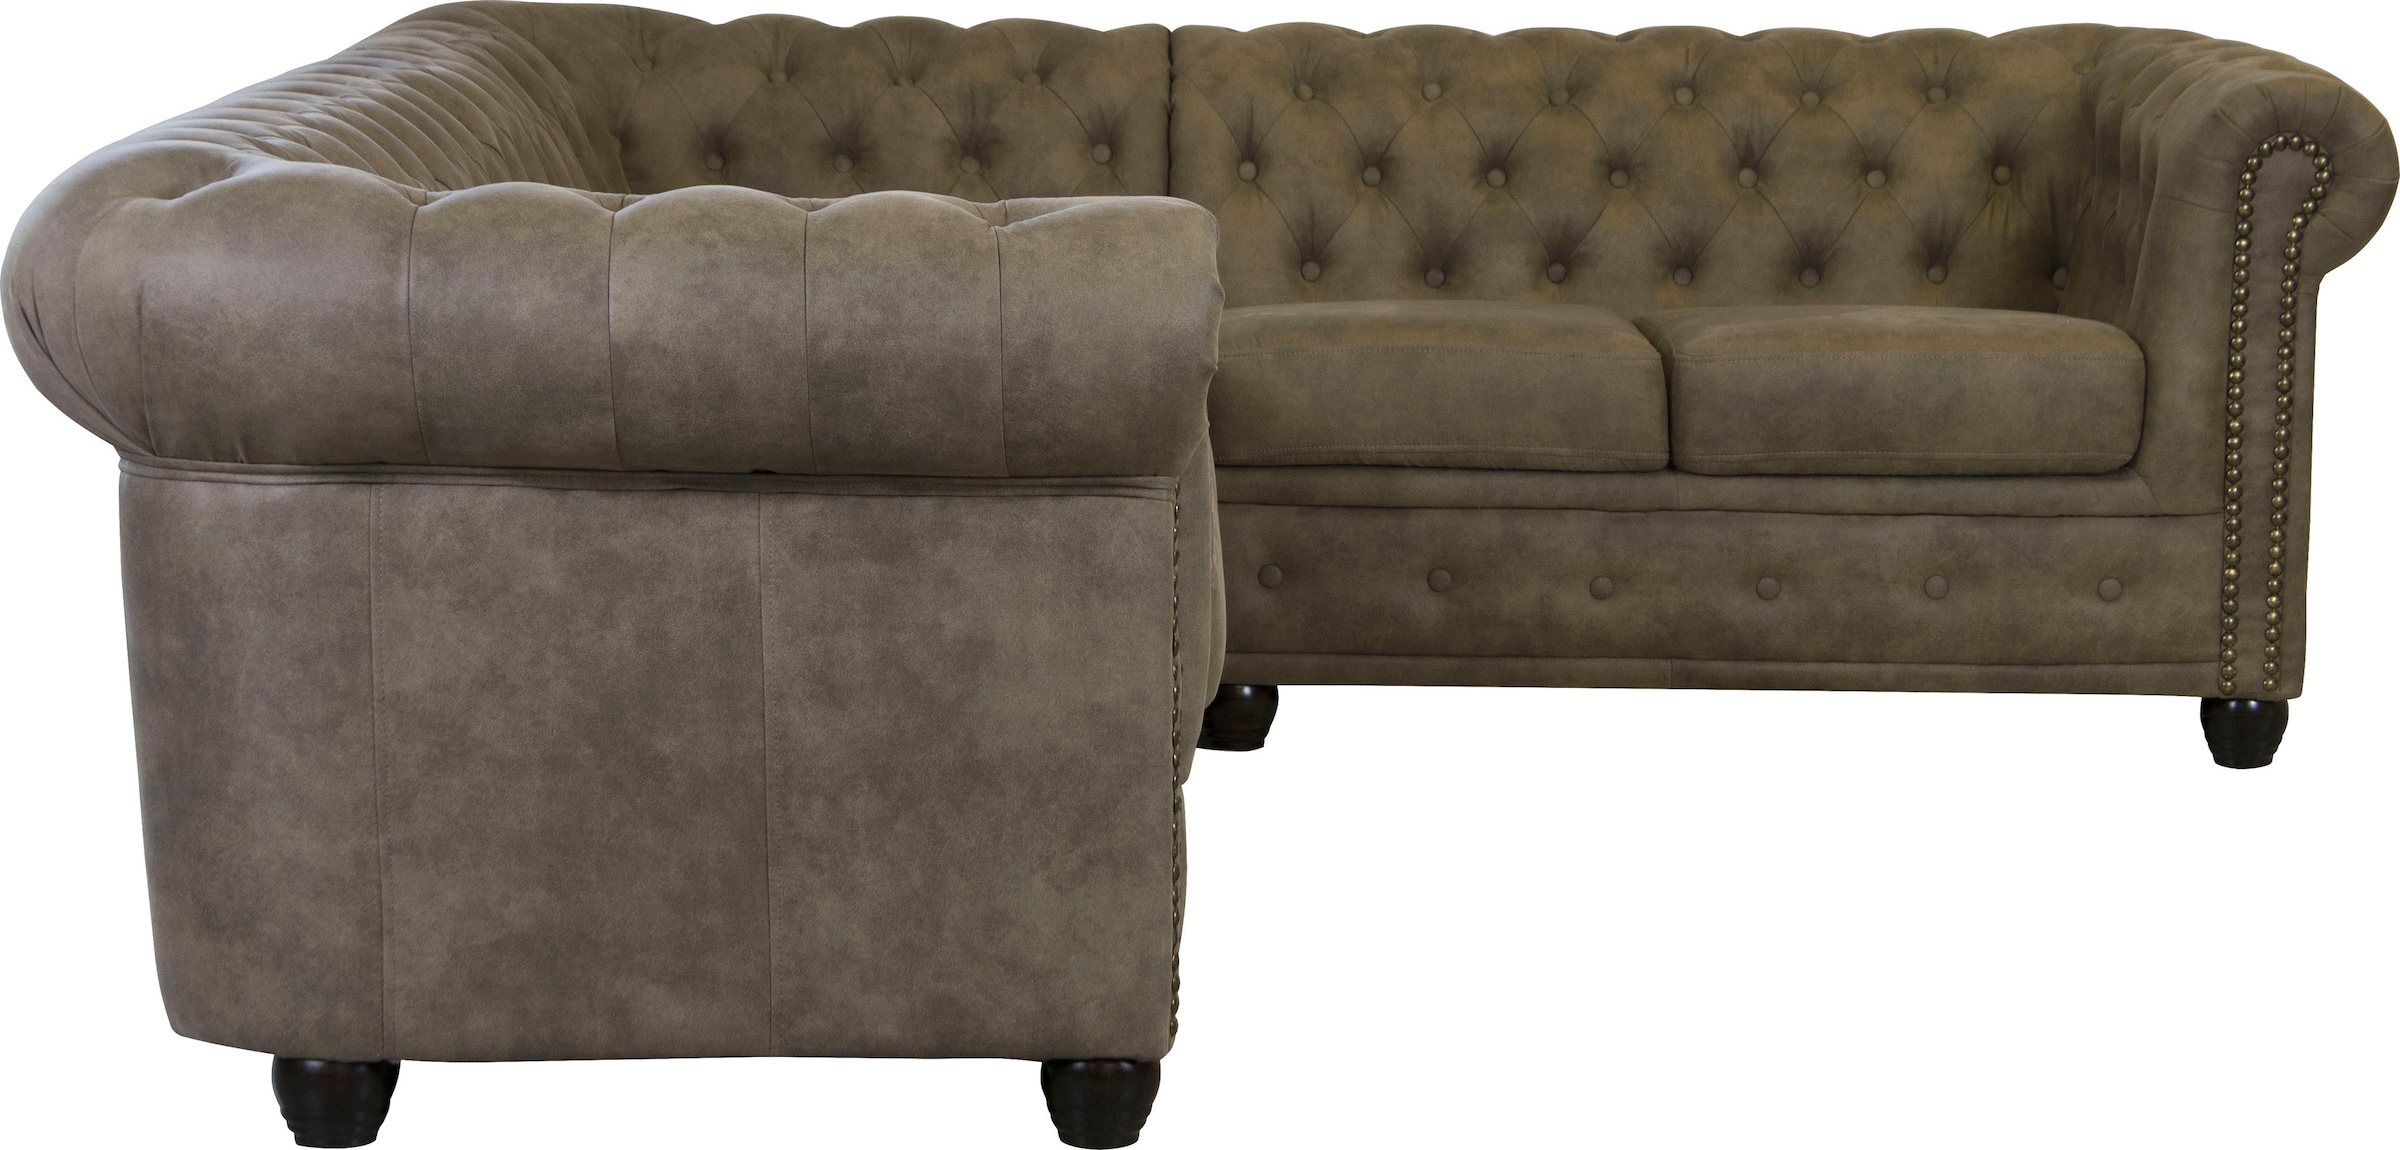 Home affaire Chesterfield-Sofa »Rysum L-Form«, Chesterfield-Optik, langer Schenkel links oder rechts